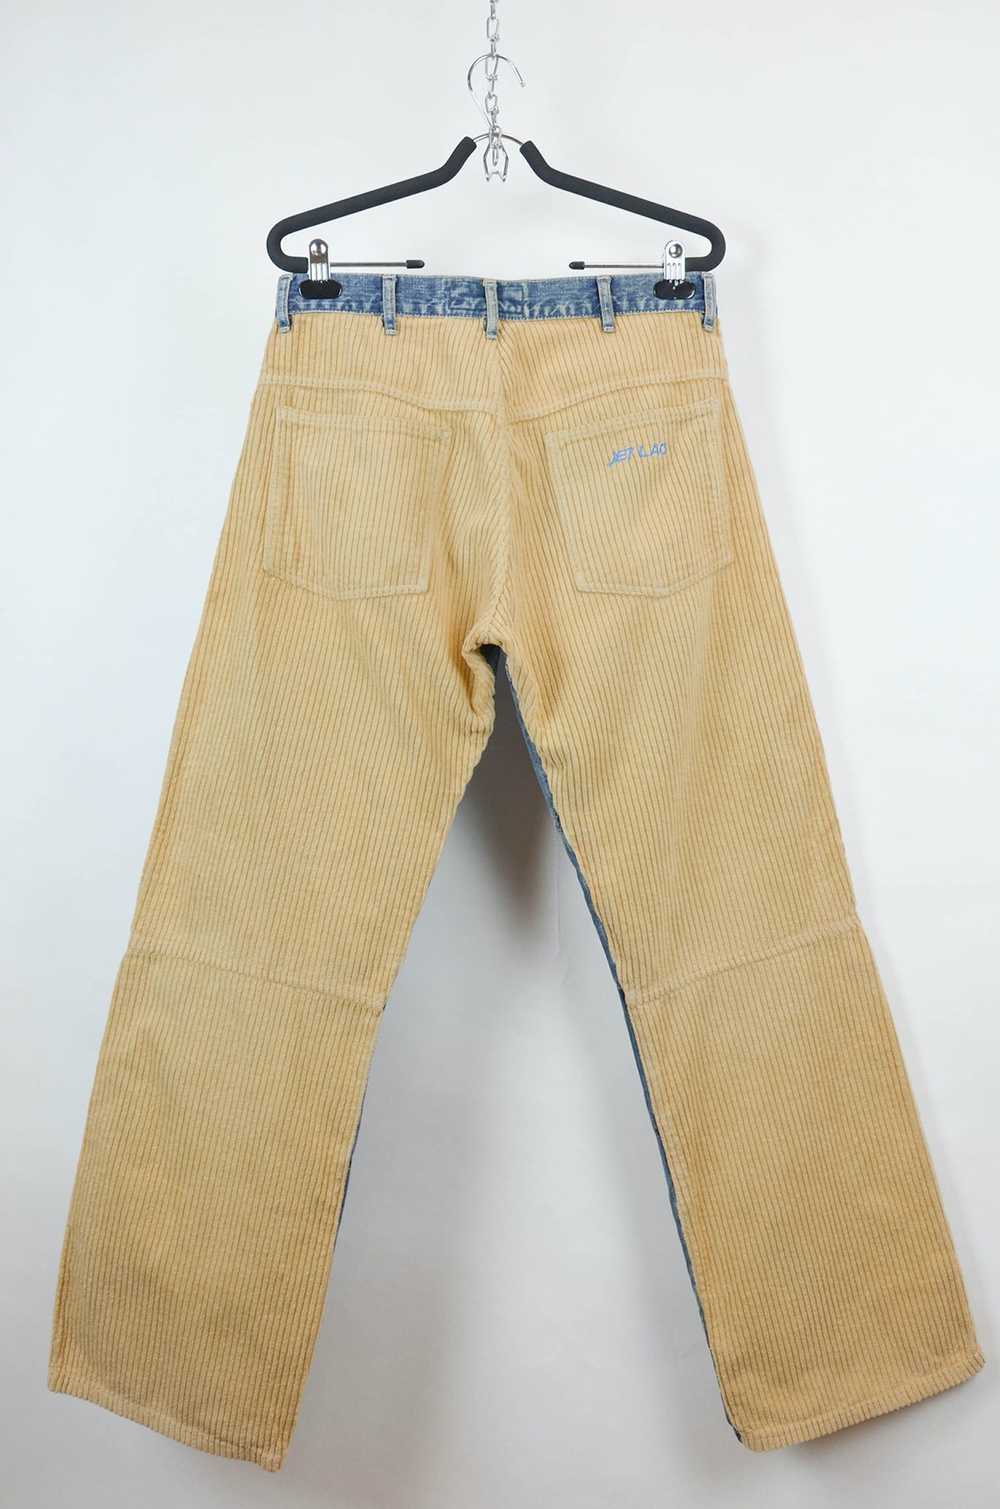 Jet Lag JET LAG Vintage Half Corduroy Jeans - image 2